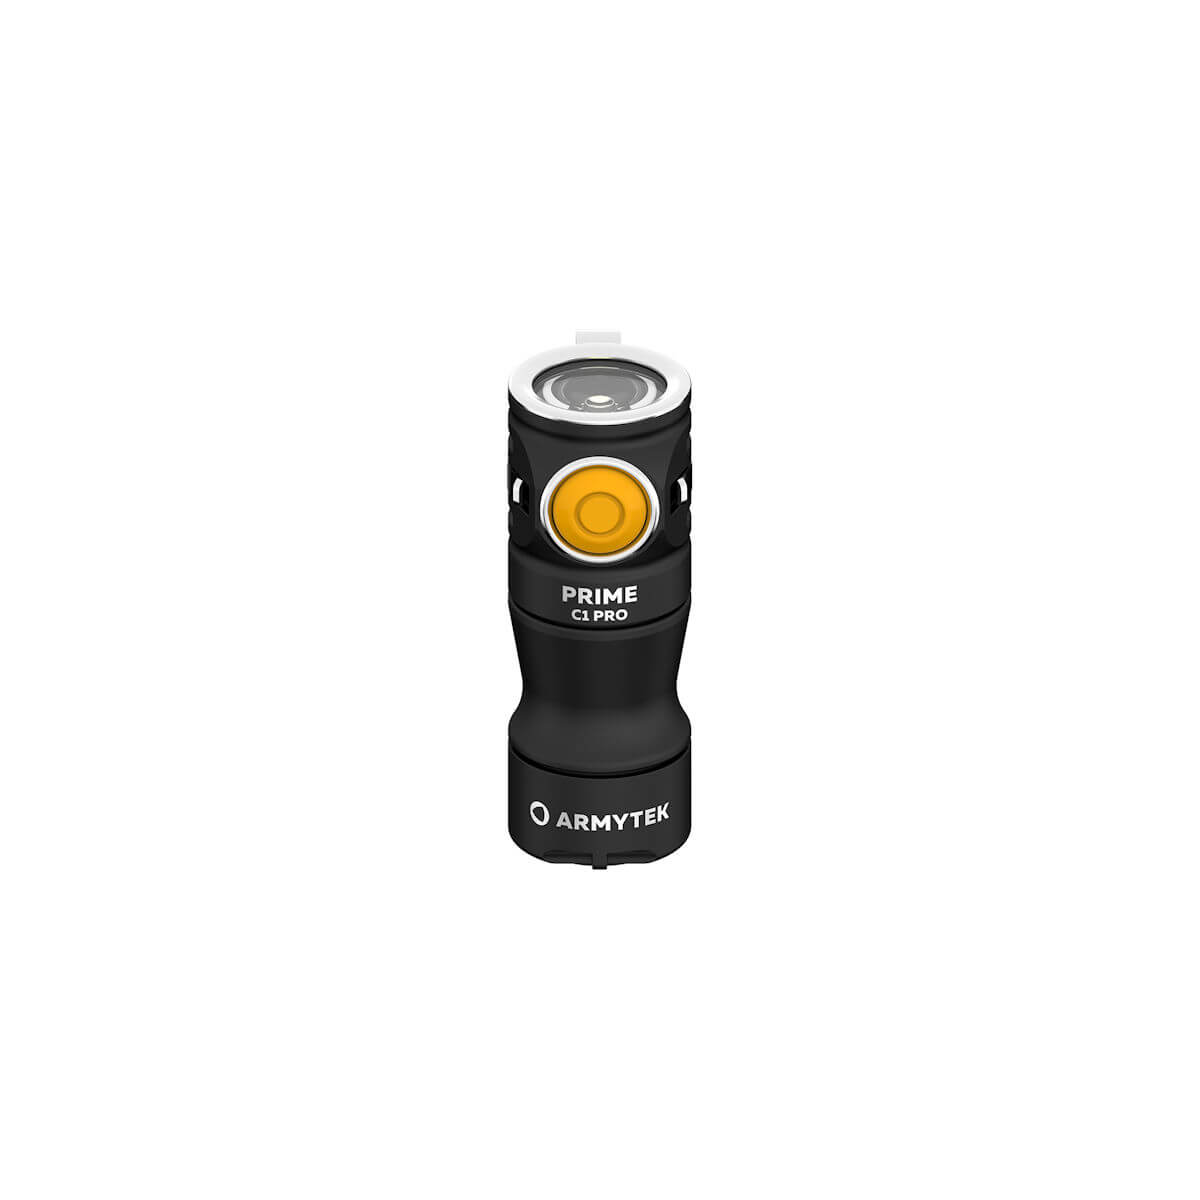 Armytek Prime C1 Pro LED Taschenlampe mit Akku kaltweiss LED-Taschenlampe Taschenlampe